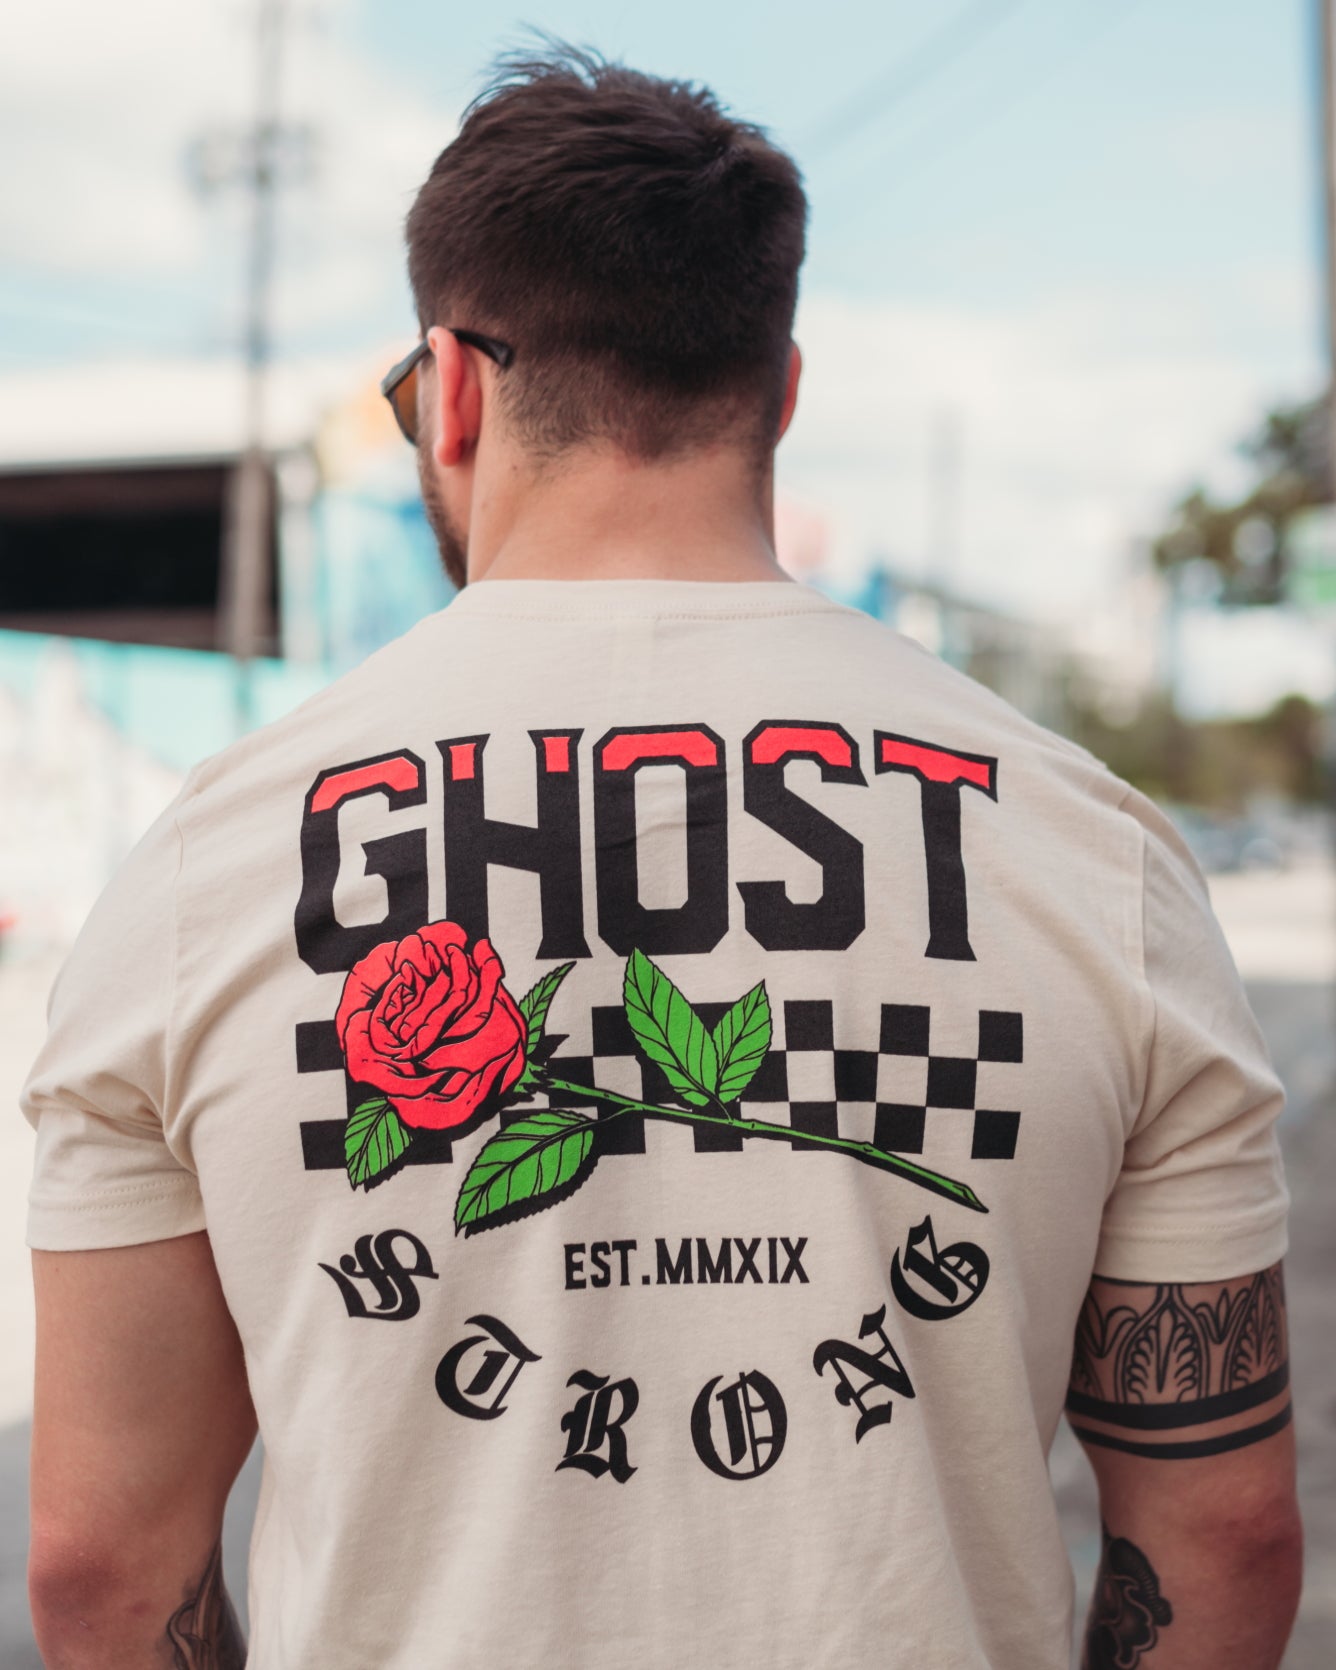 Ghost Check Ya L8r T-shirt